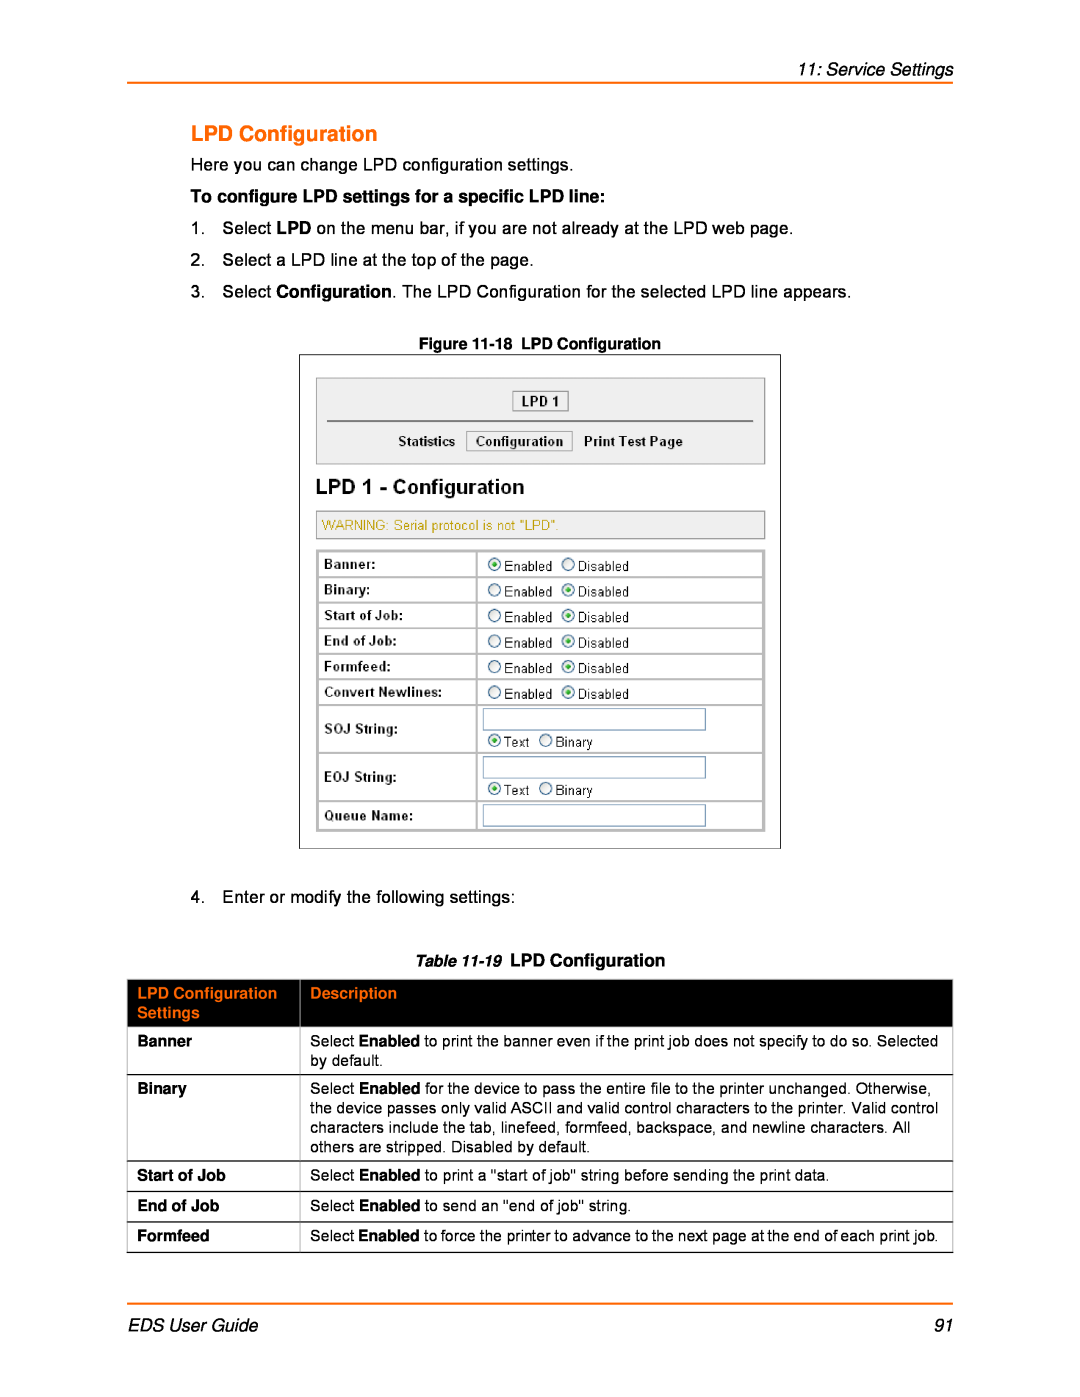 Lantronix EDS16PR LPD Configuration, Service Settings, To configure LPD settings for a specific LPD line, EDS User Guide 